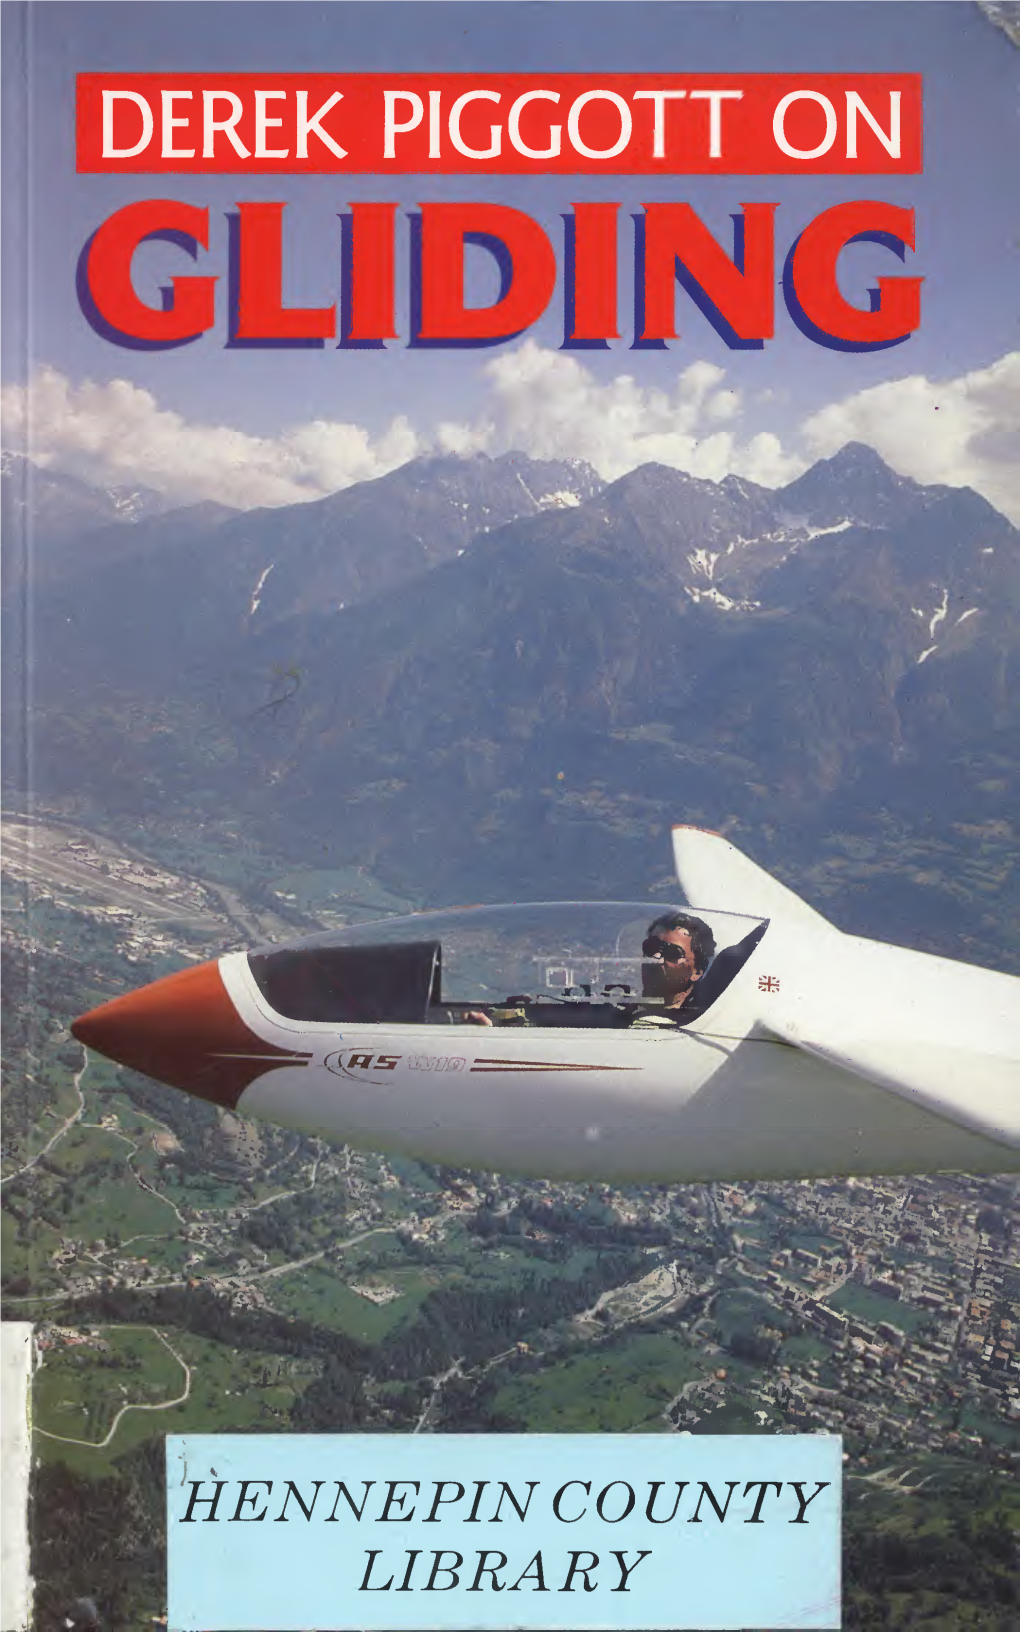 Derek Piggott on Gliding